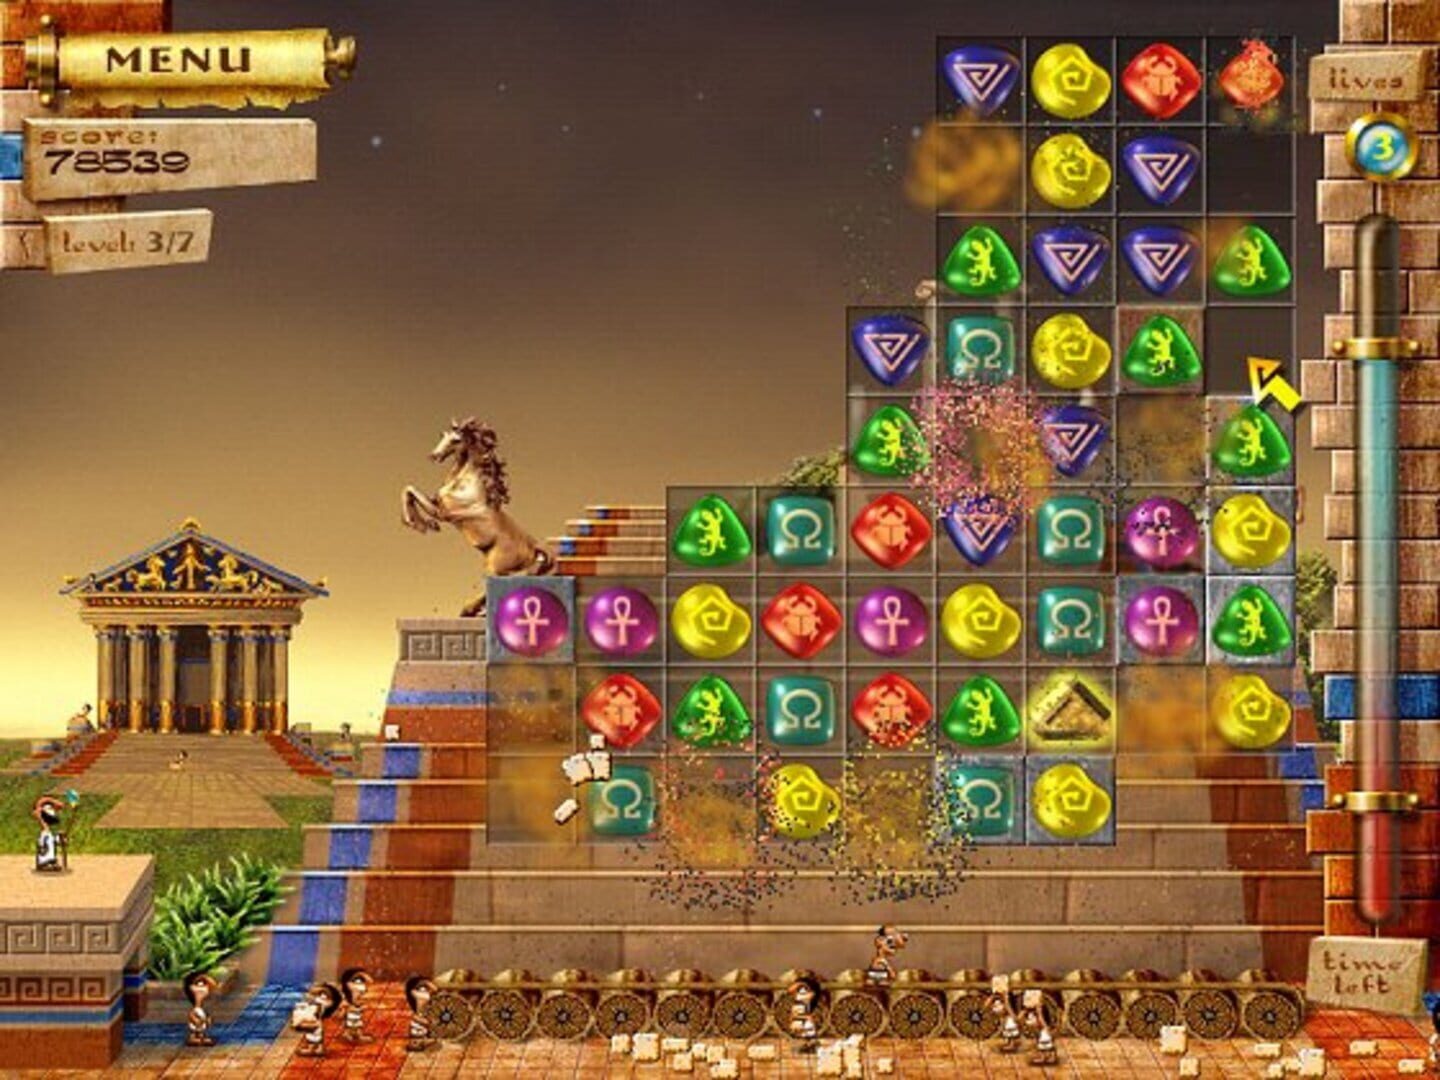 Игра в пирамиду персонажи. 7 Wonders игра. Семь чудес света игра. Игра 7 чудес света Египет. Игра 7 Wonders пирамиды.